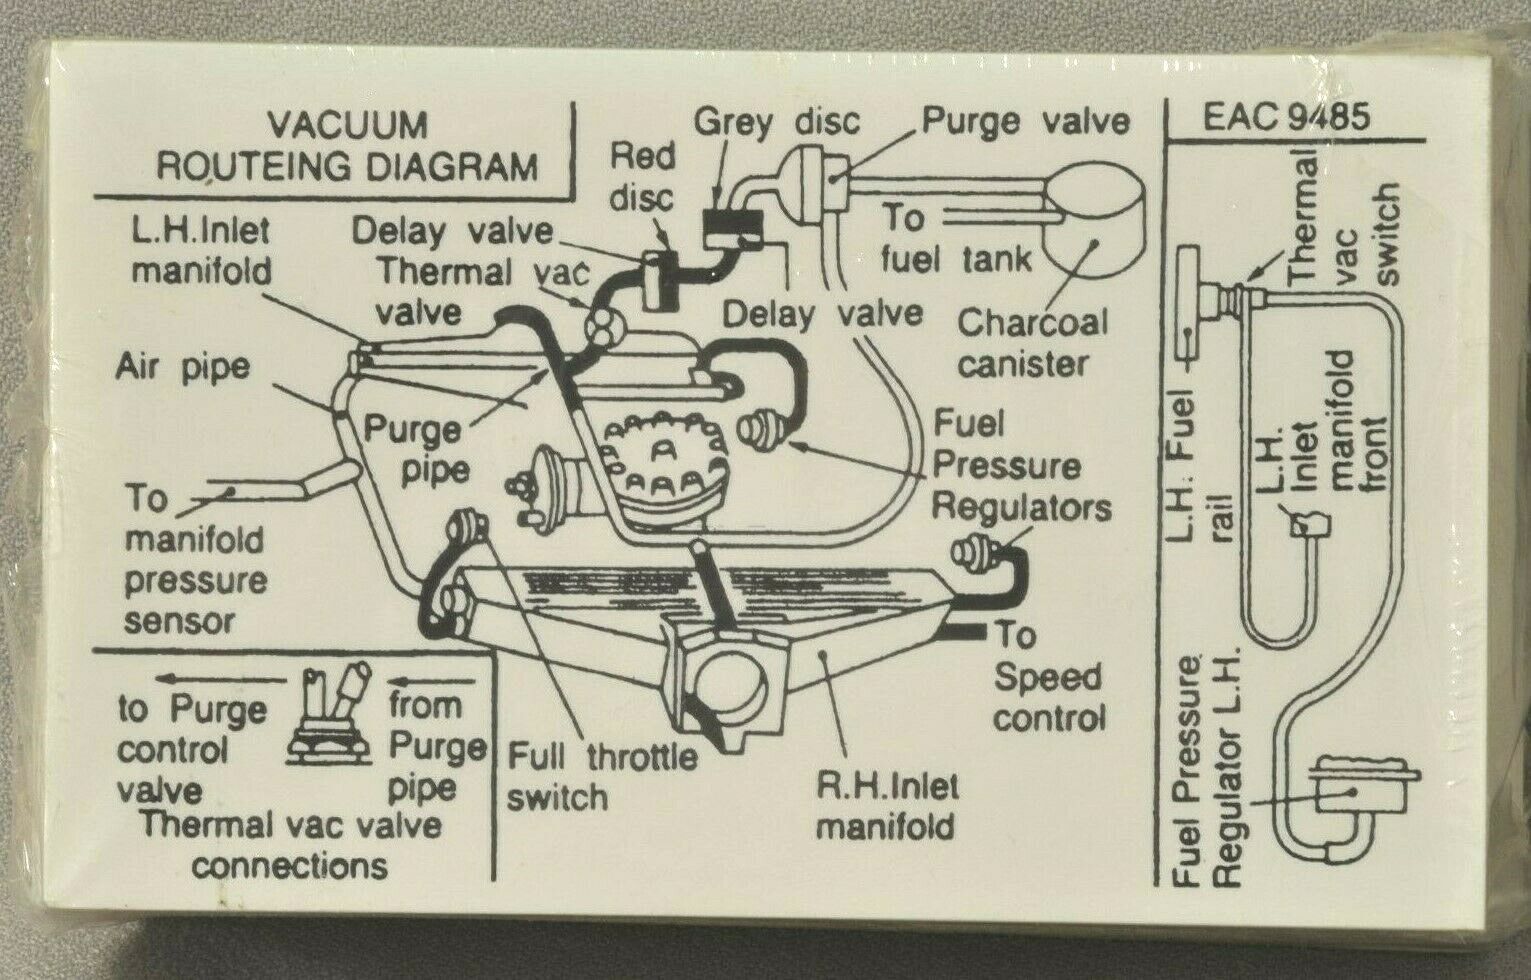 Jaguar Vacuum Routing Diagram Sticker EAC-9485  V12 Genuine Jaguar. NEW